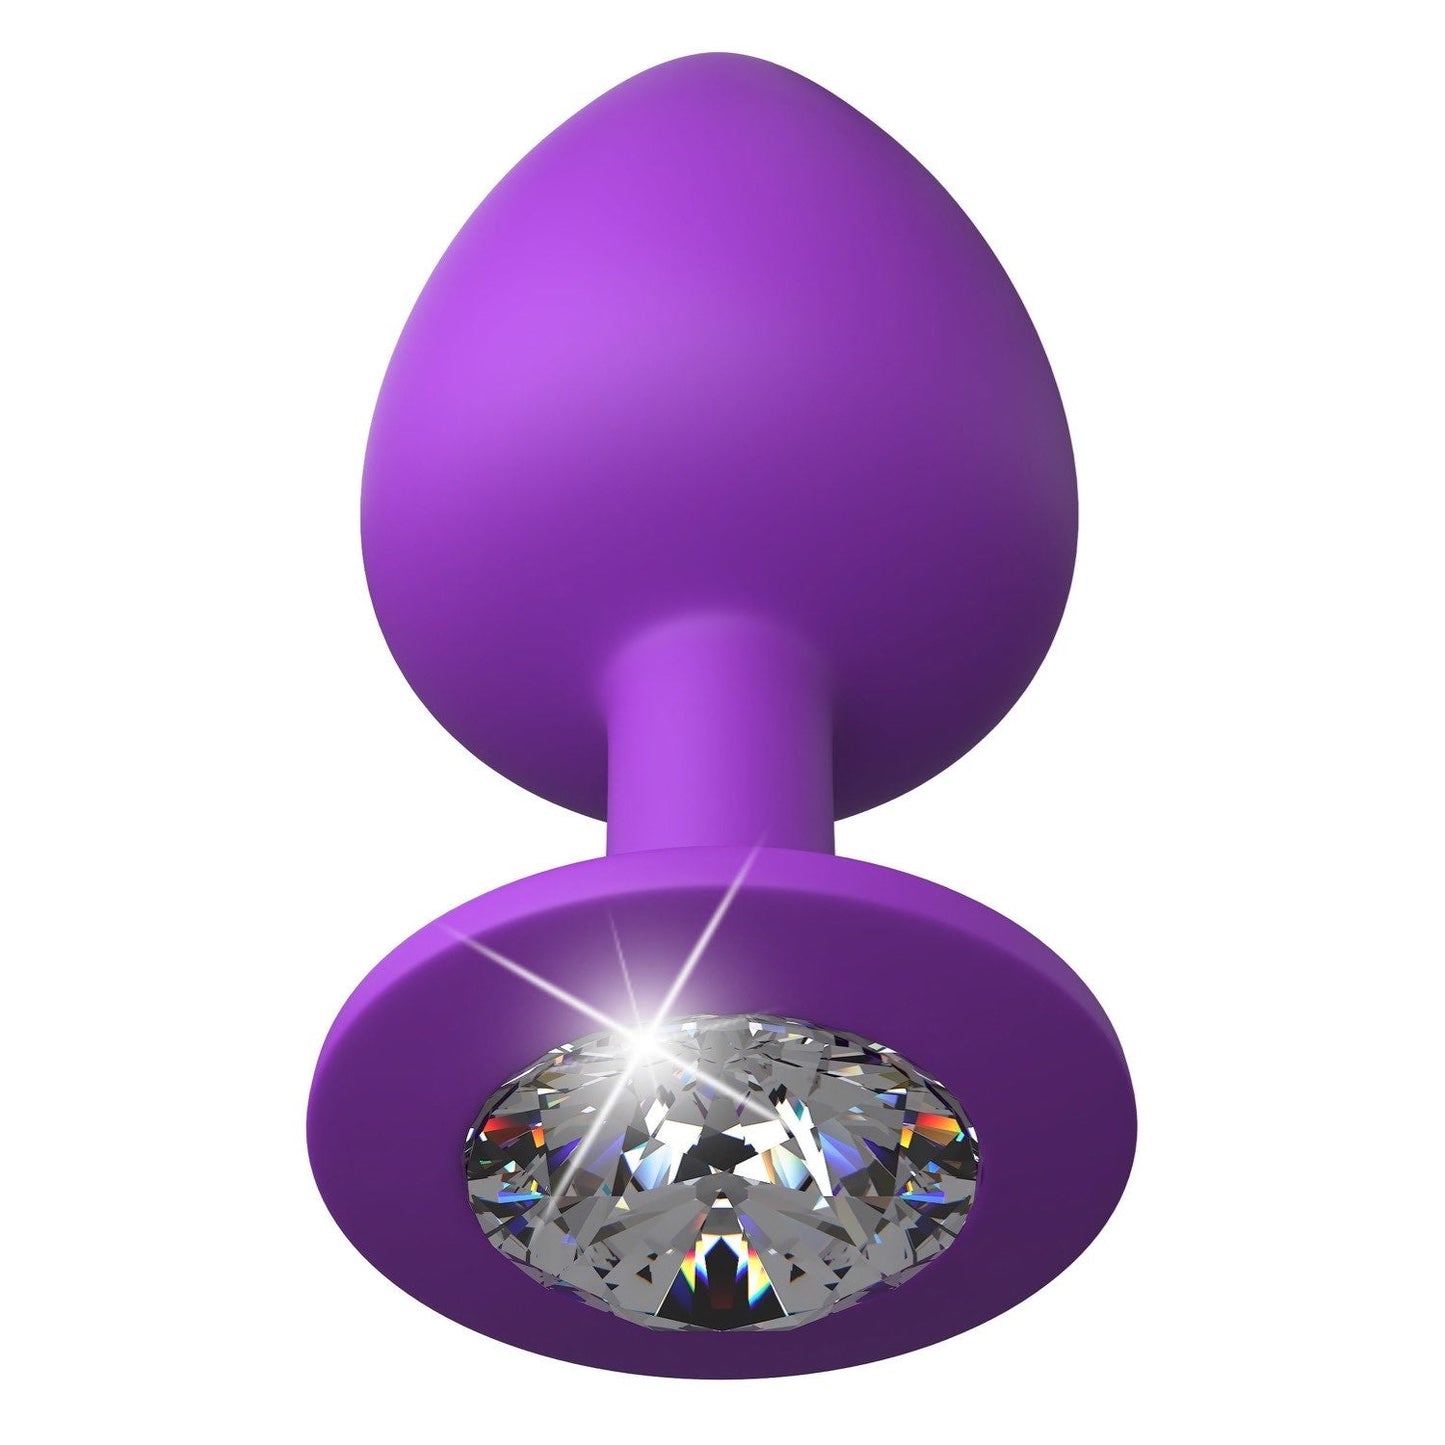 Little Gem Large Plug - Purple 9.6 cm Butt Plug with Jewel Base